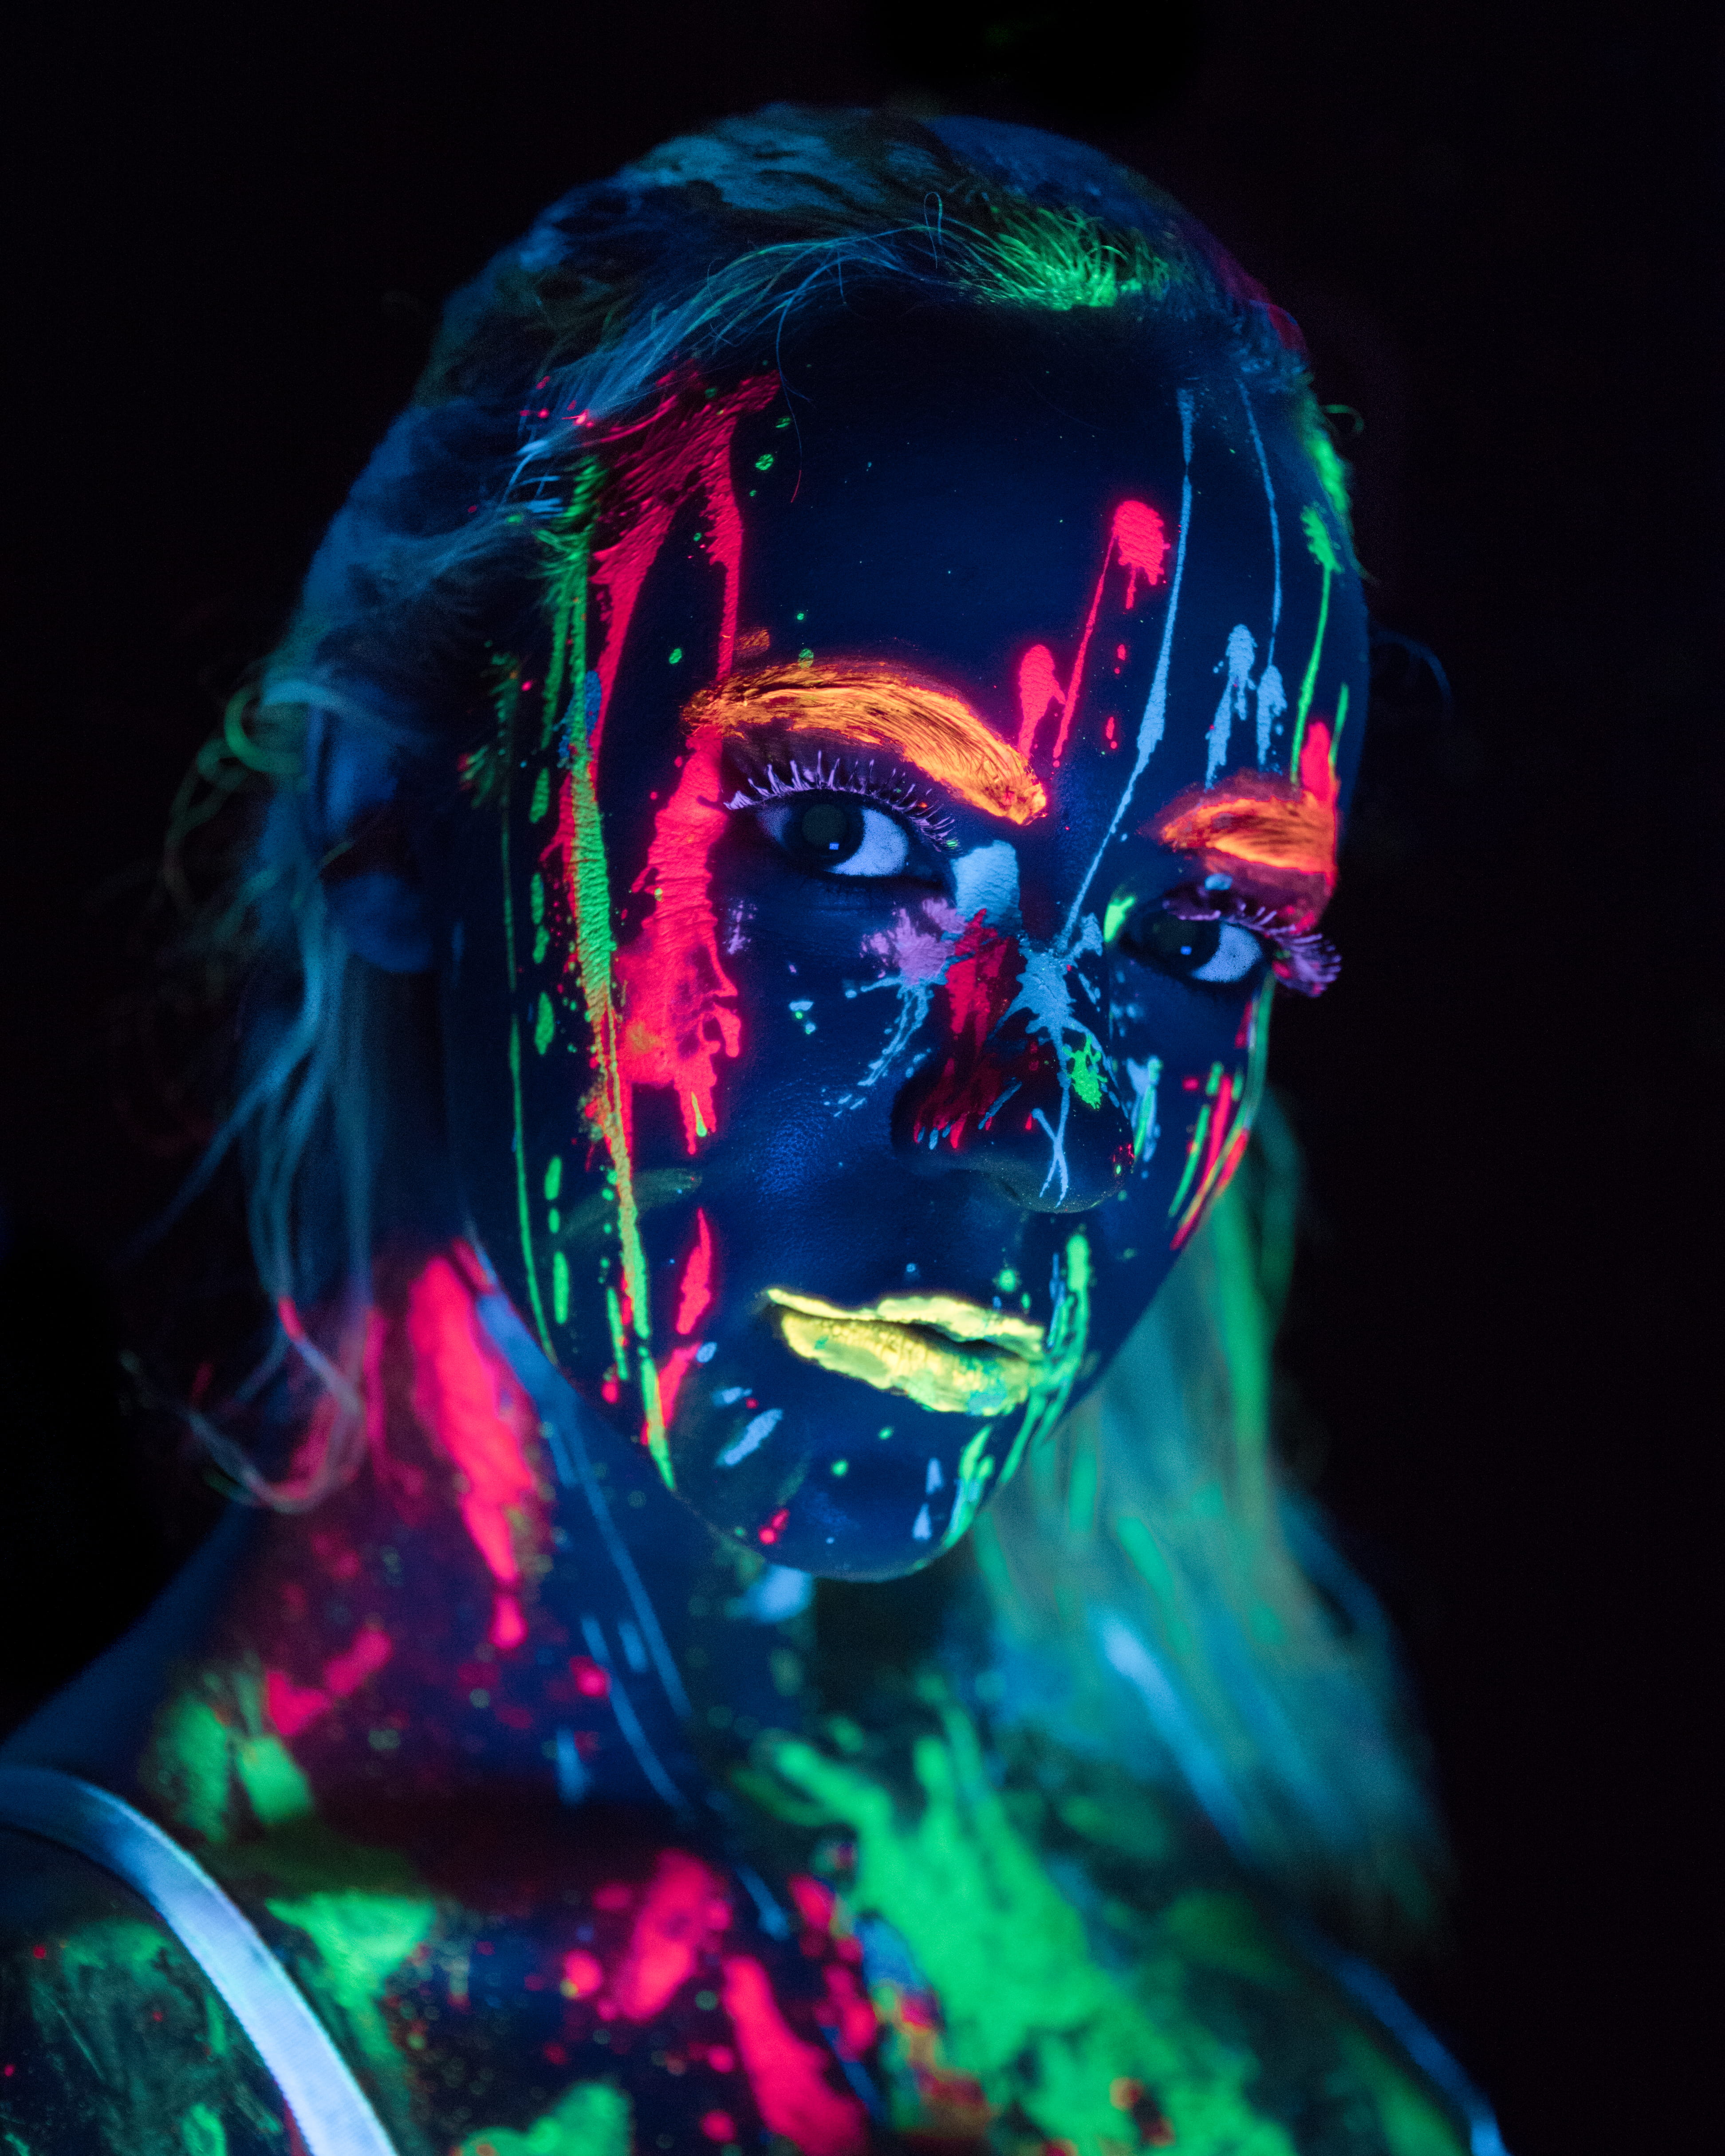 woman with glow in the dark body paint, portrait, neon, neon paint